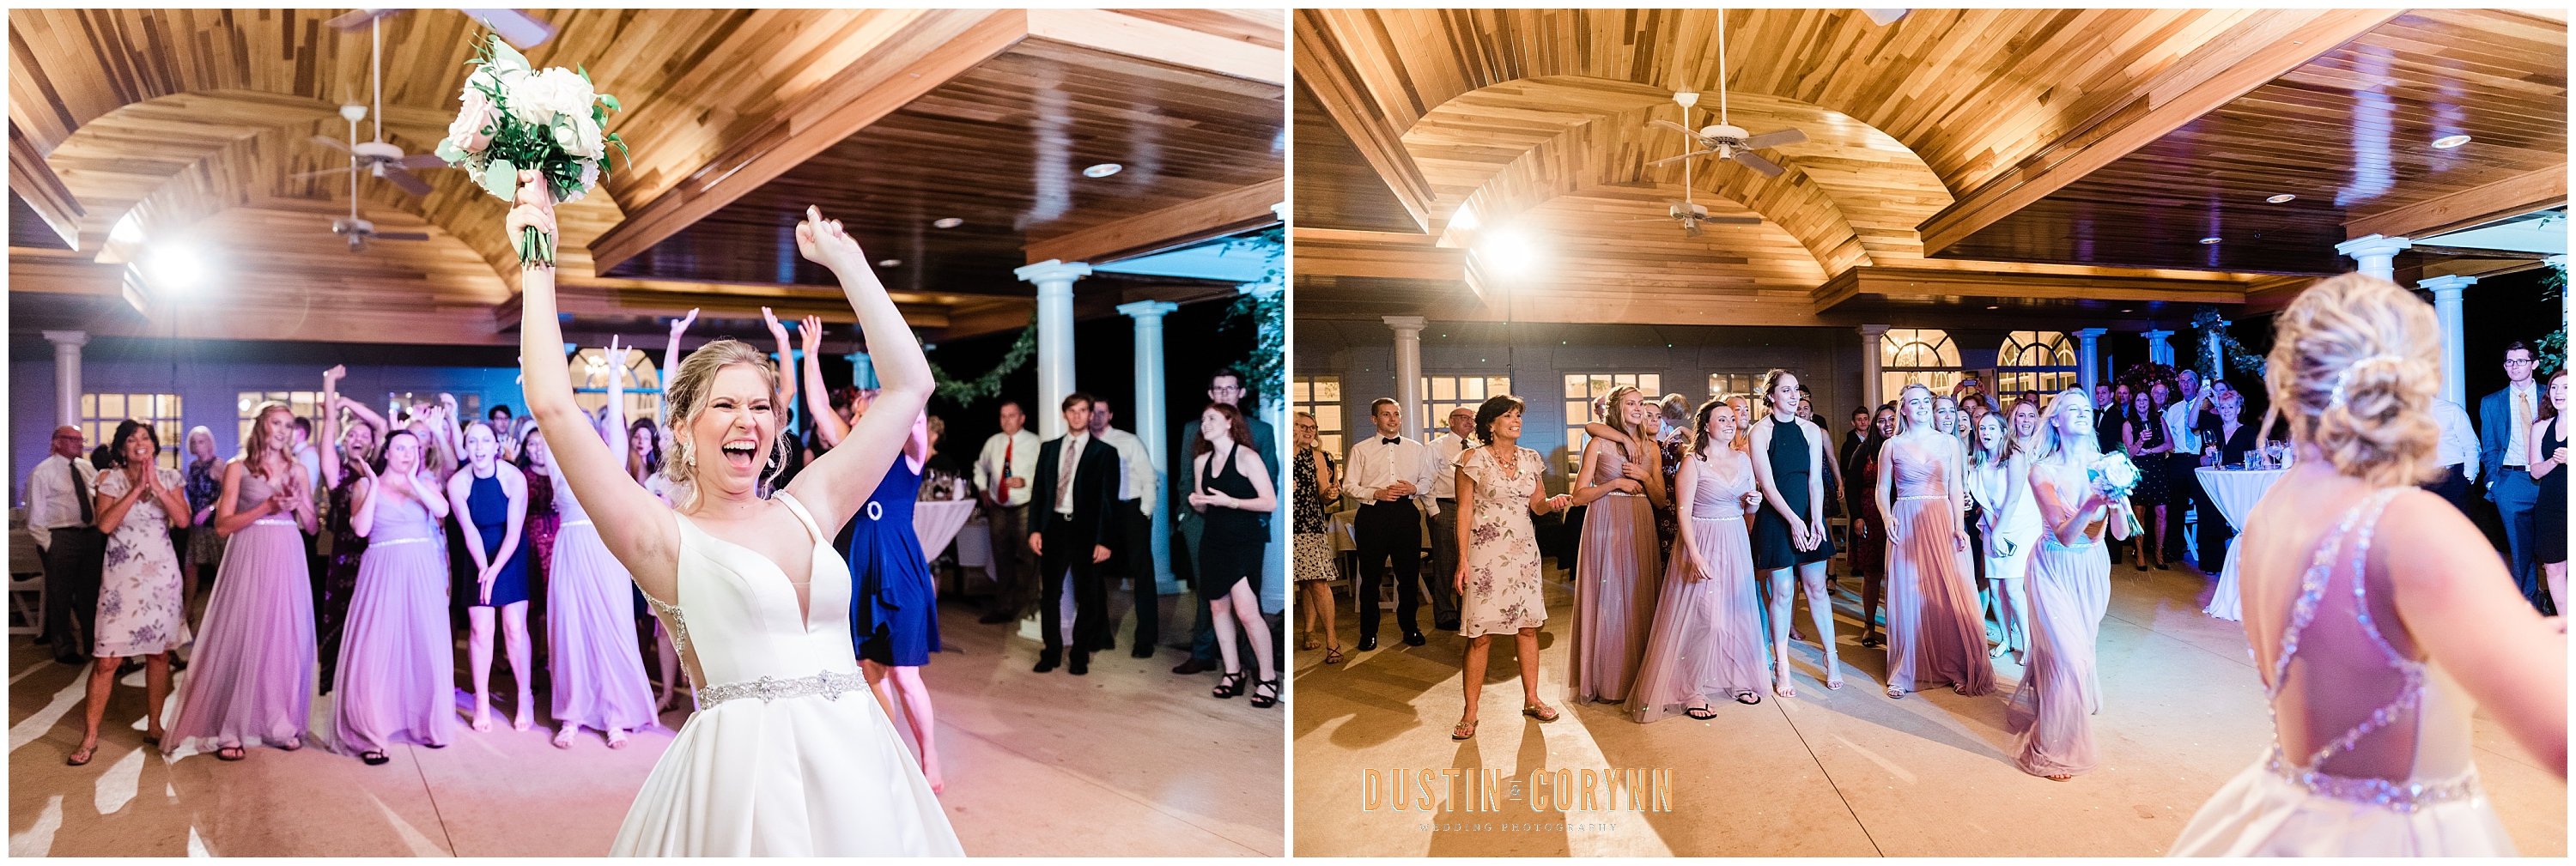 Indiana wedding photographer captures bride throwing bouquet